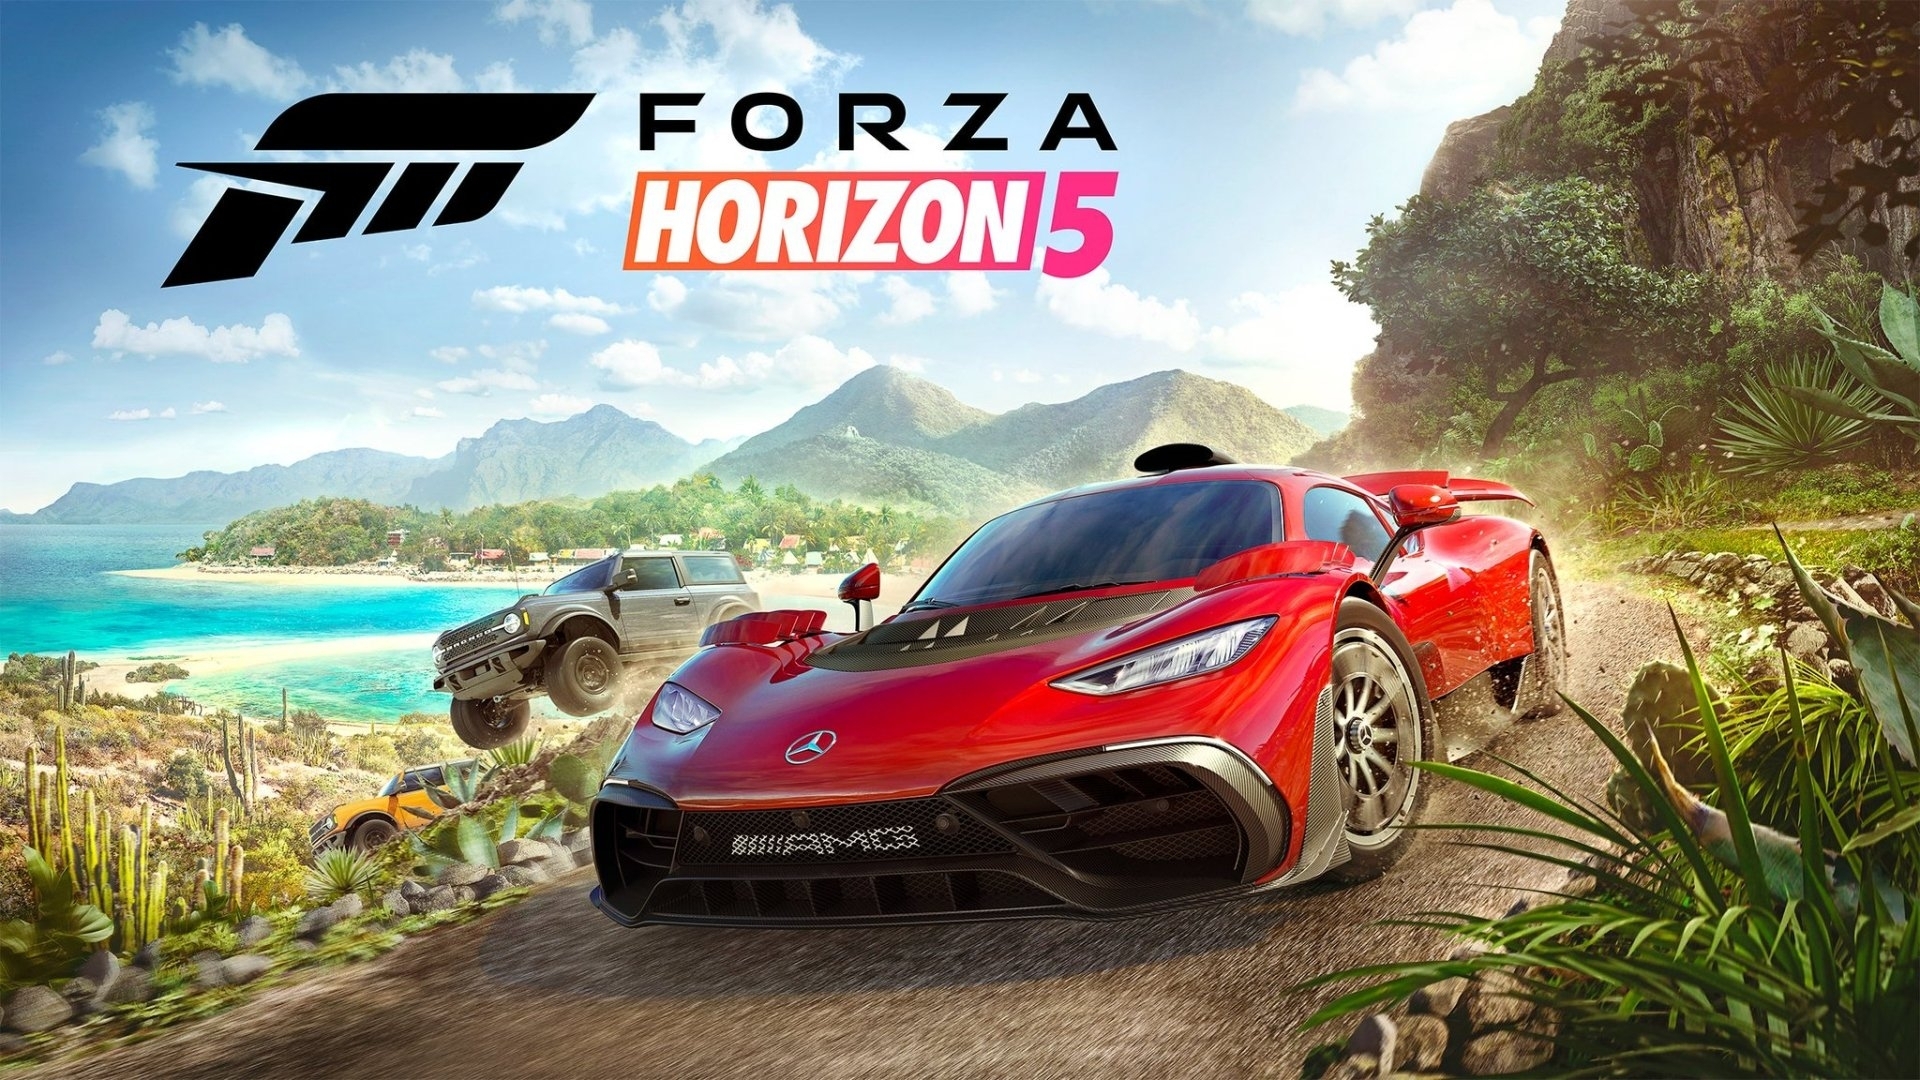 forza horizon 2 pc download ocean of games